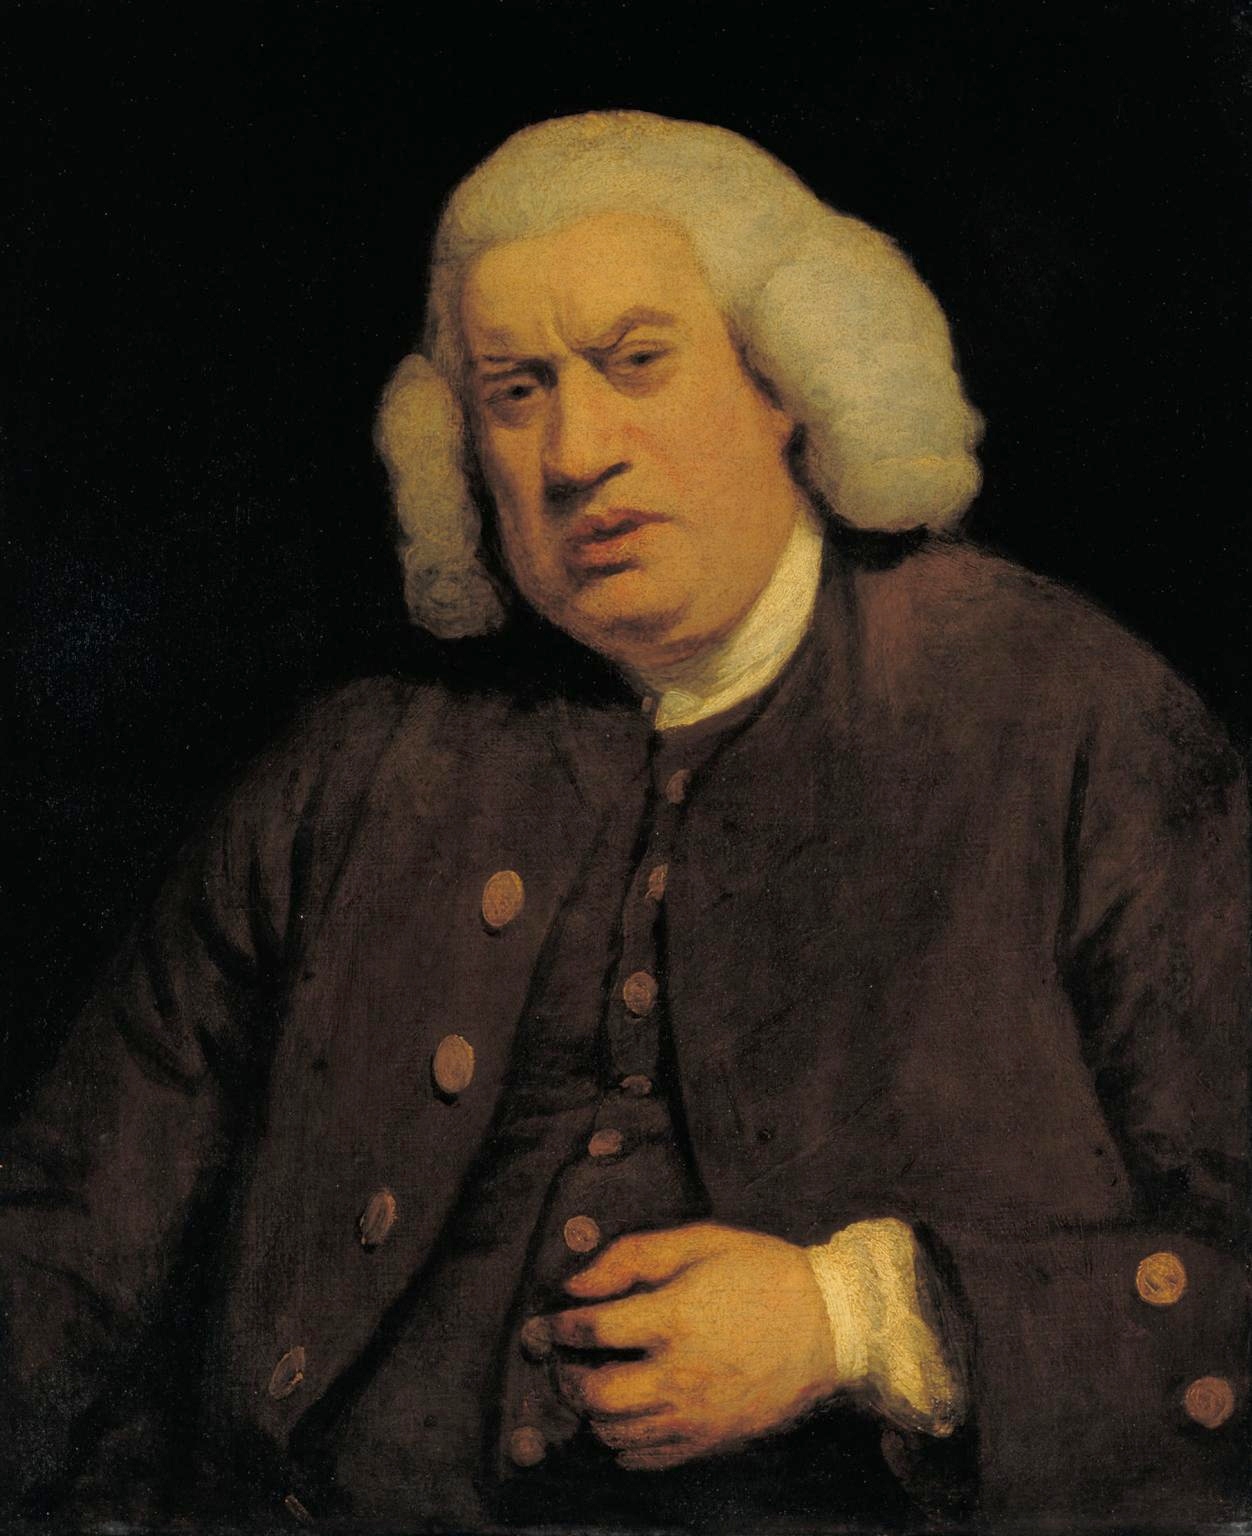 Samuel Johnson by Joshua Reynolds (1772)